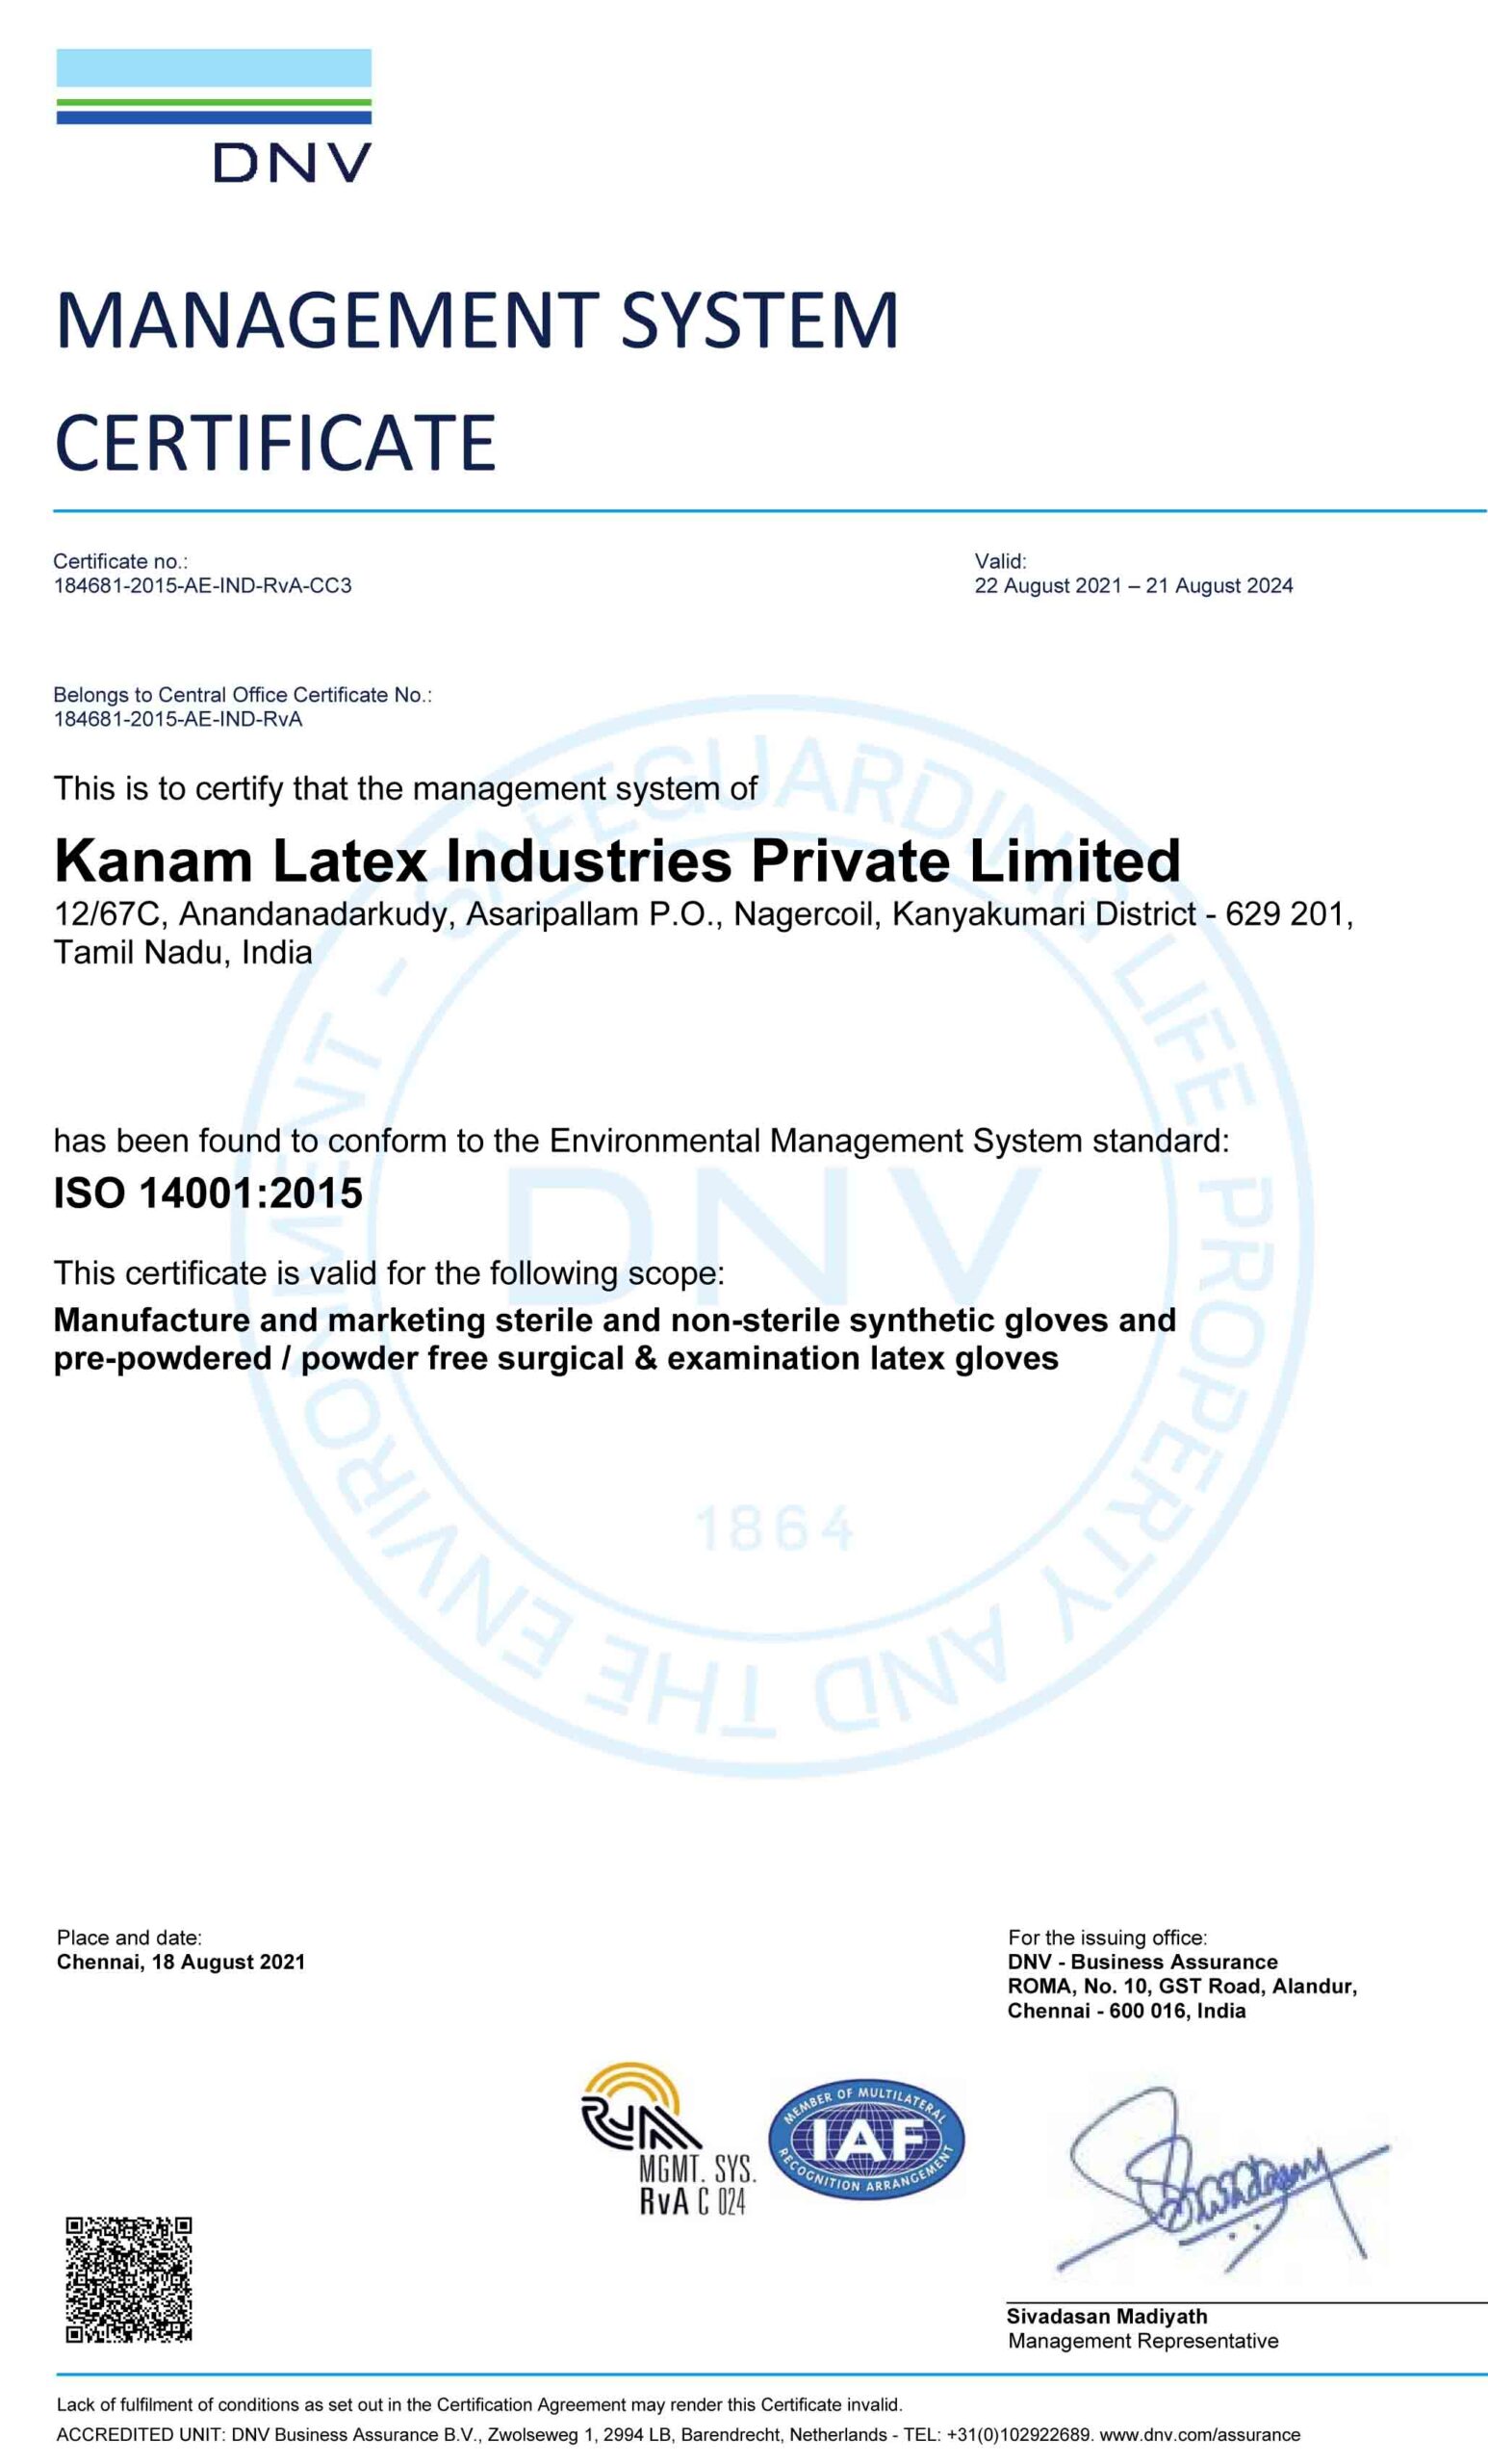 KANAM MSC Certificate